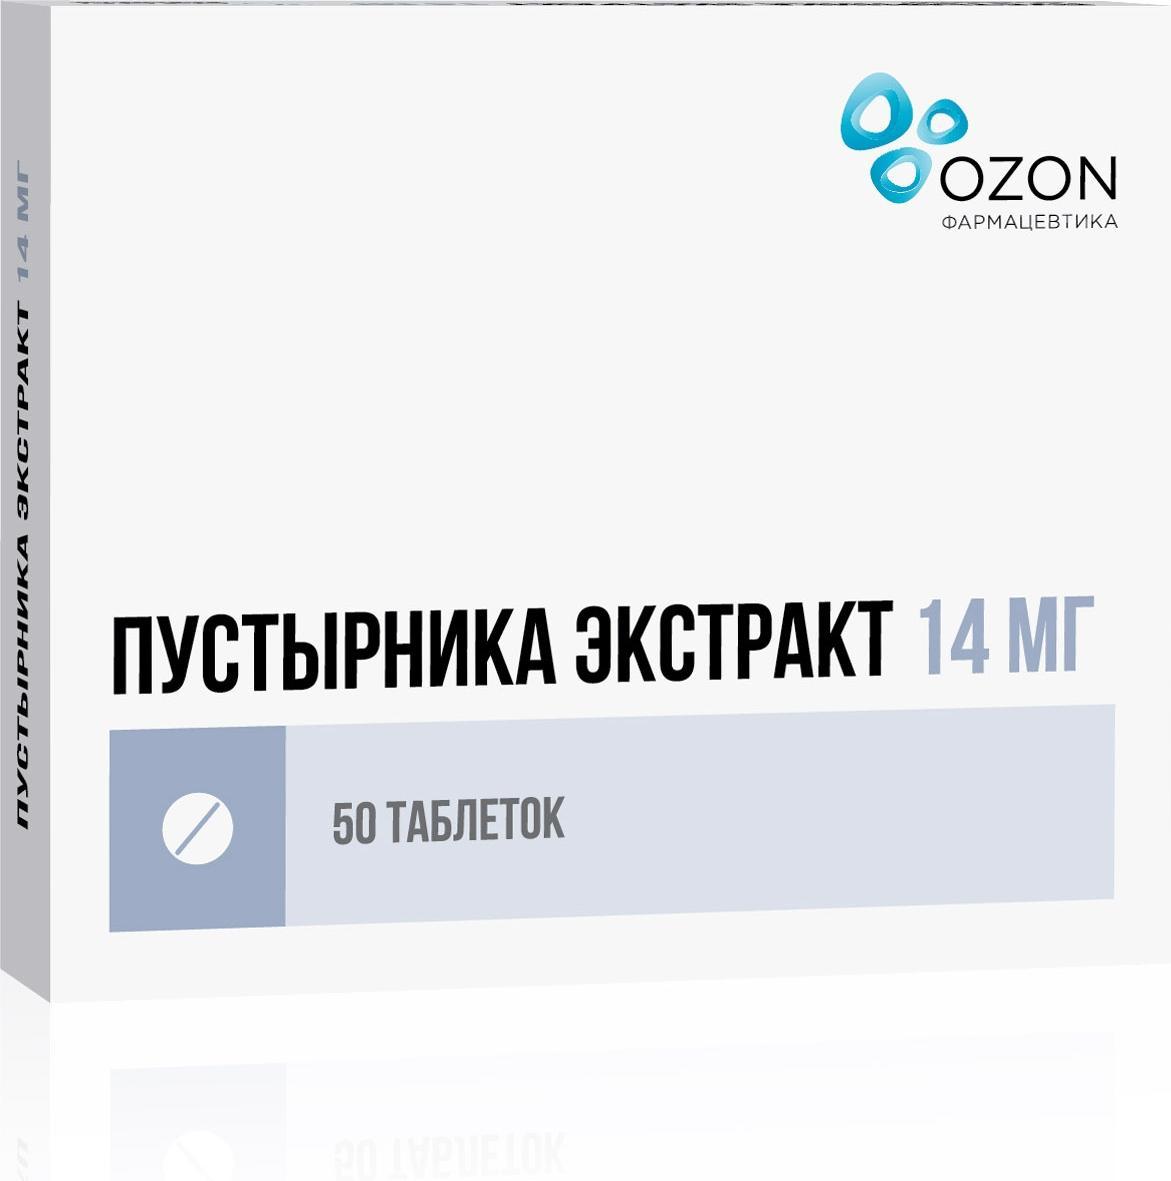 Пустырника экстракт, таблетки 14 мг (Озон), 50 шт. циннаризин таблетки 25мг 50шт озон